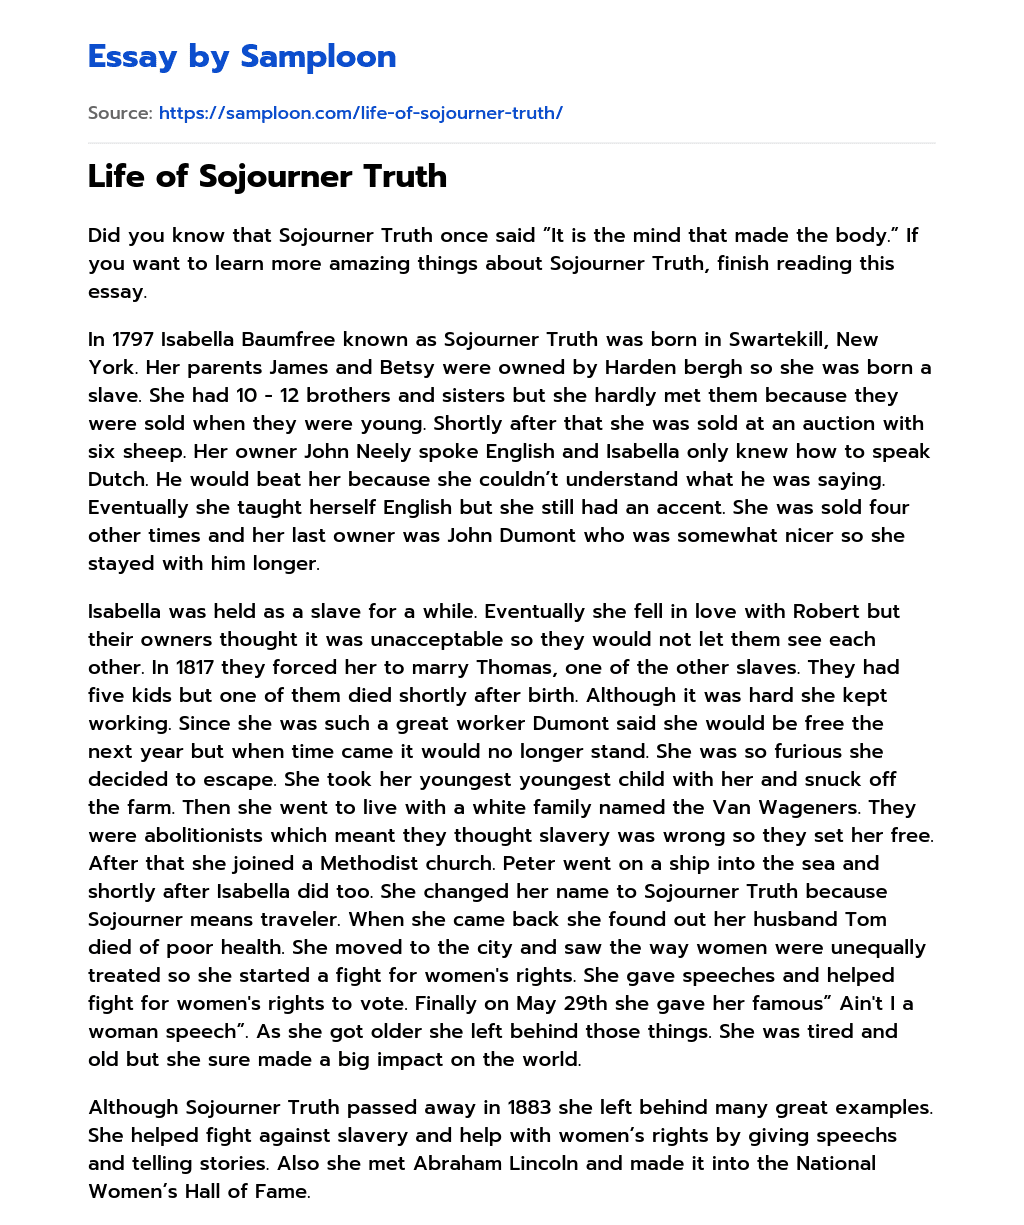 Life of Sojourner Truth essay